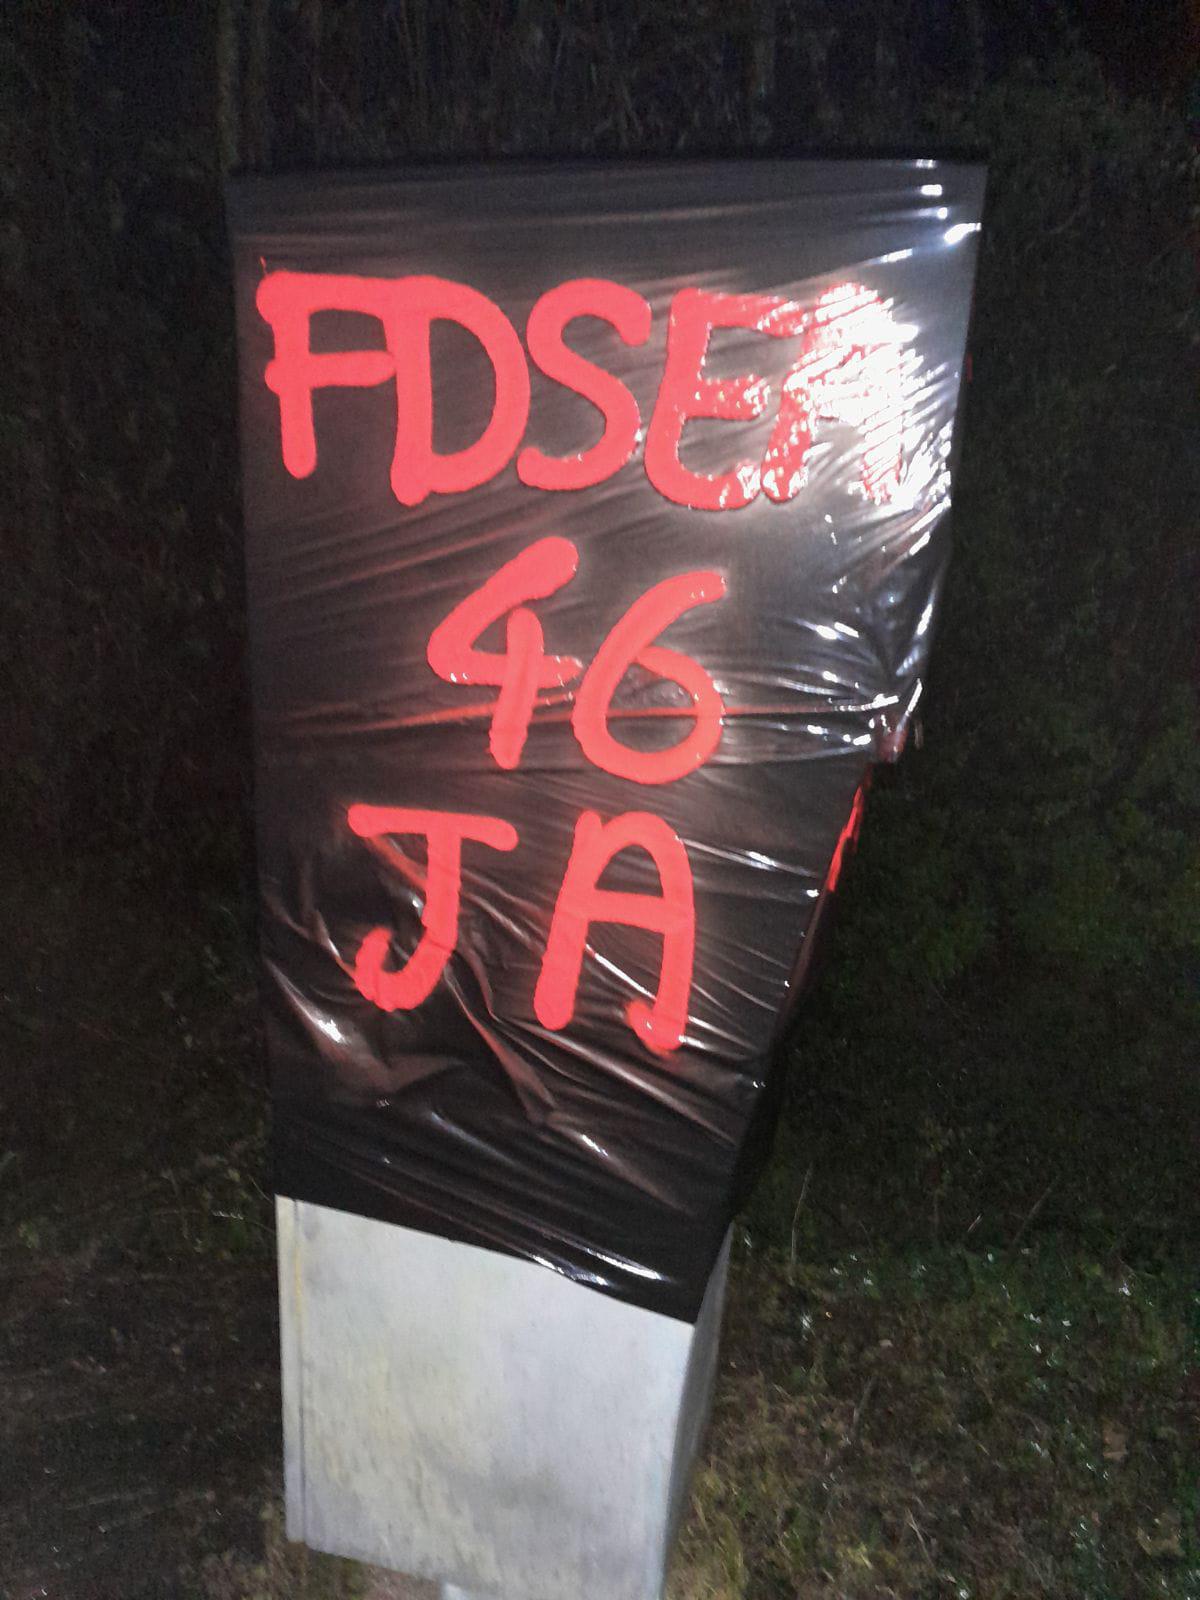 FDSEA46 & JA du Lot : Opération bâchage des radars du Lot